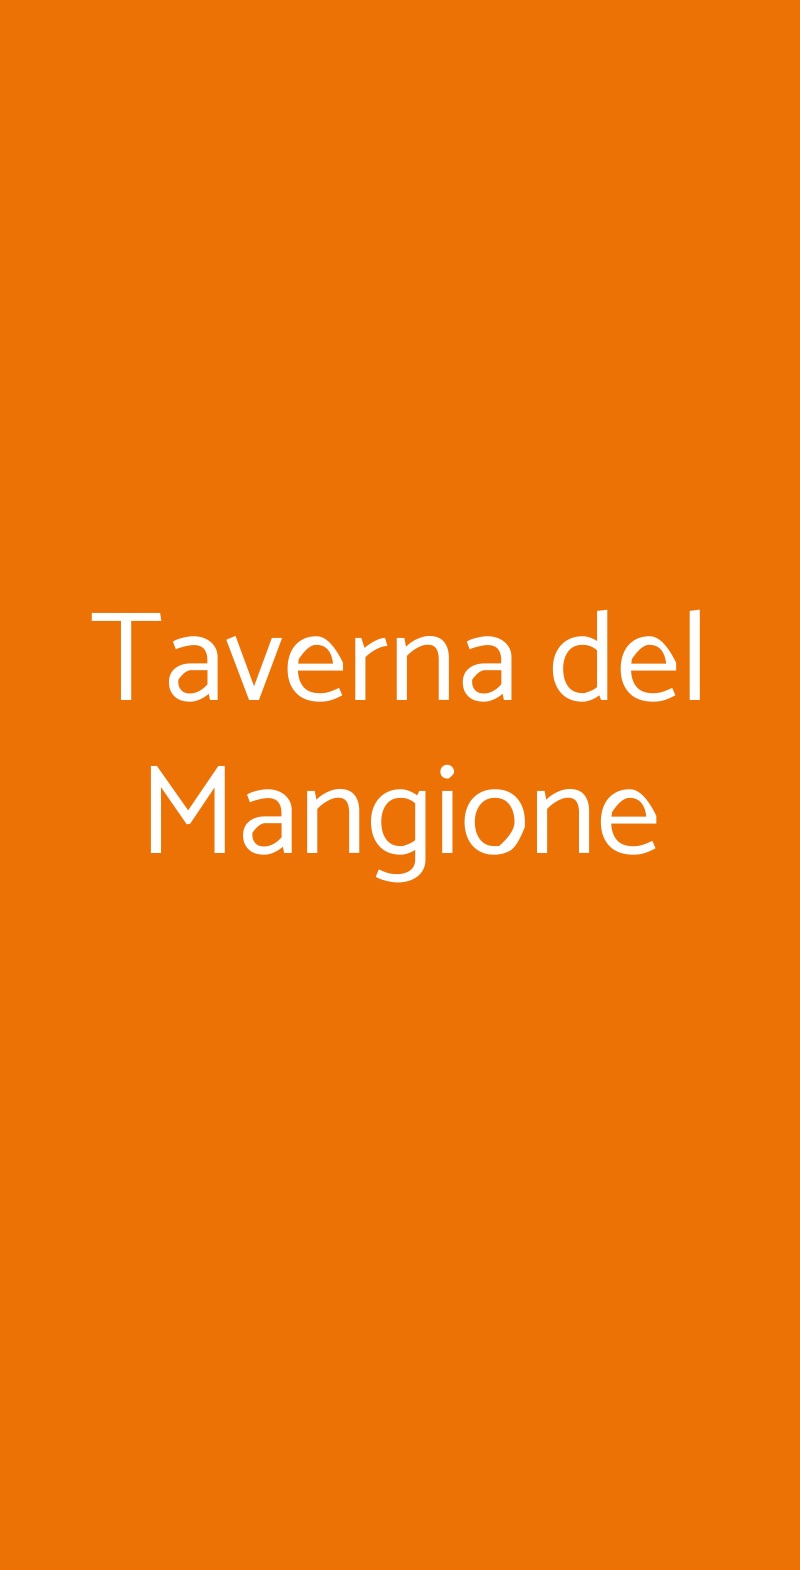 Taverna del Mangione Napoli menù 1 pagina